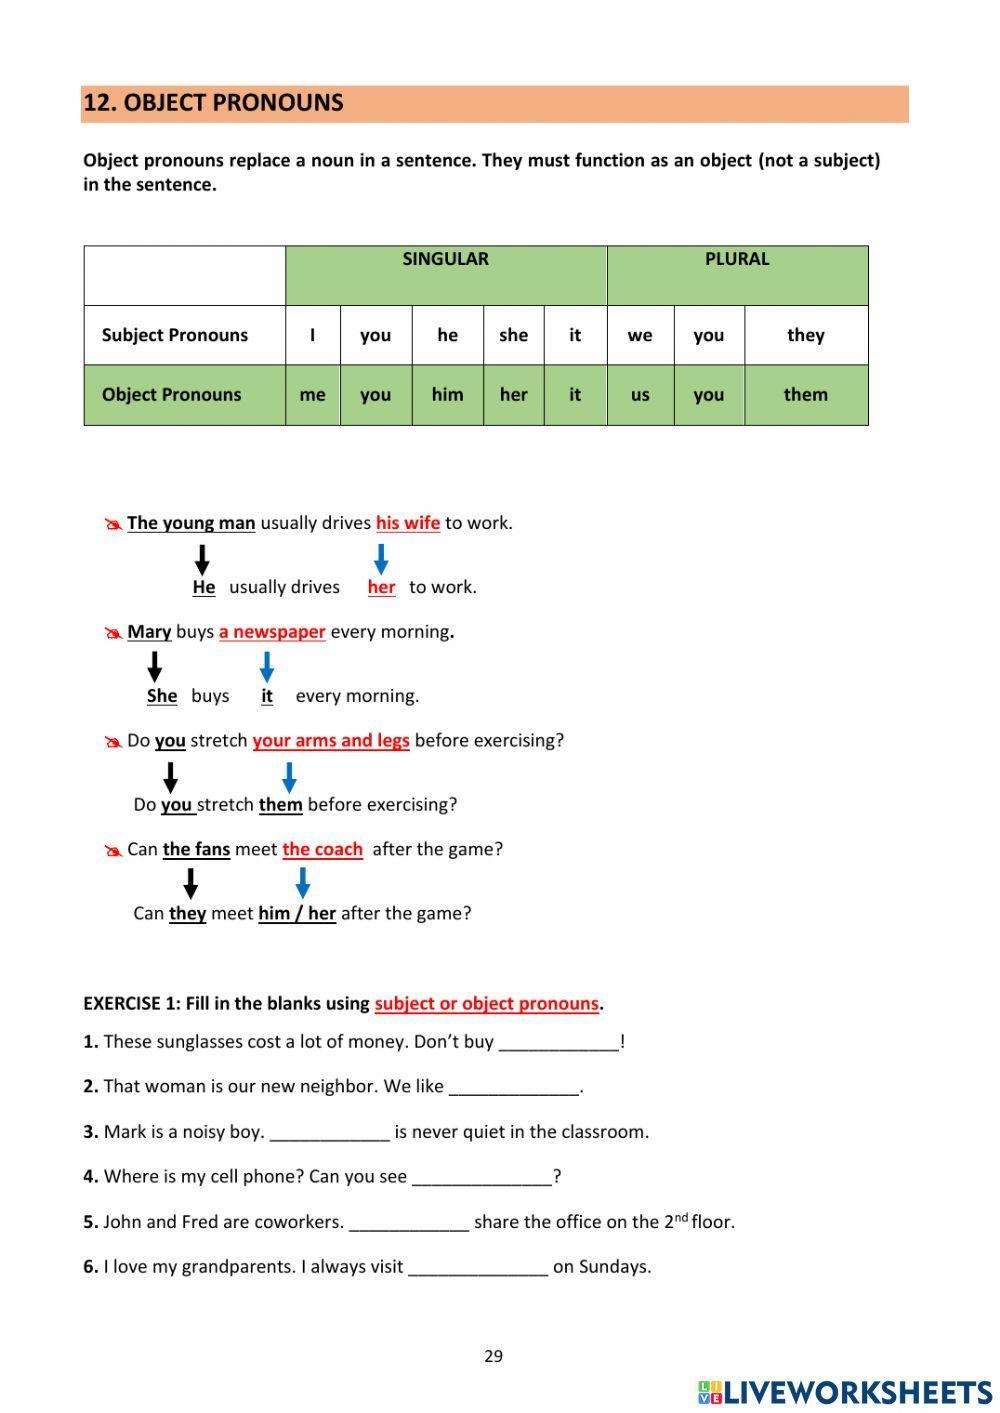 A Level MC Subject-Object Pronouns ( Booklet Pg:29-30)